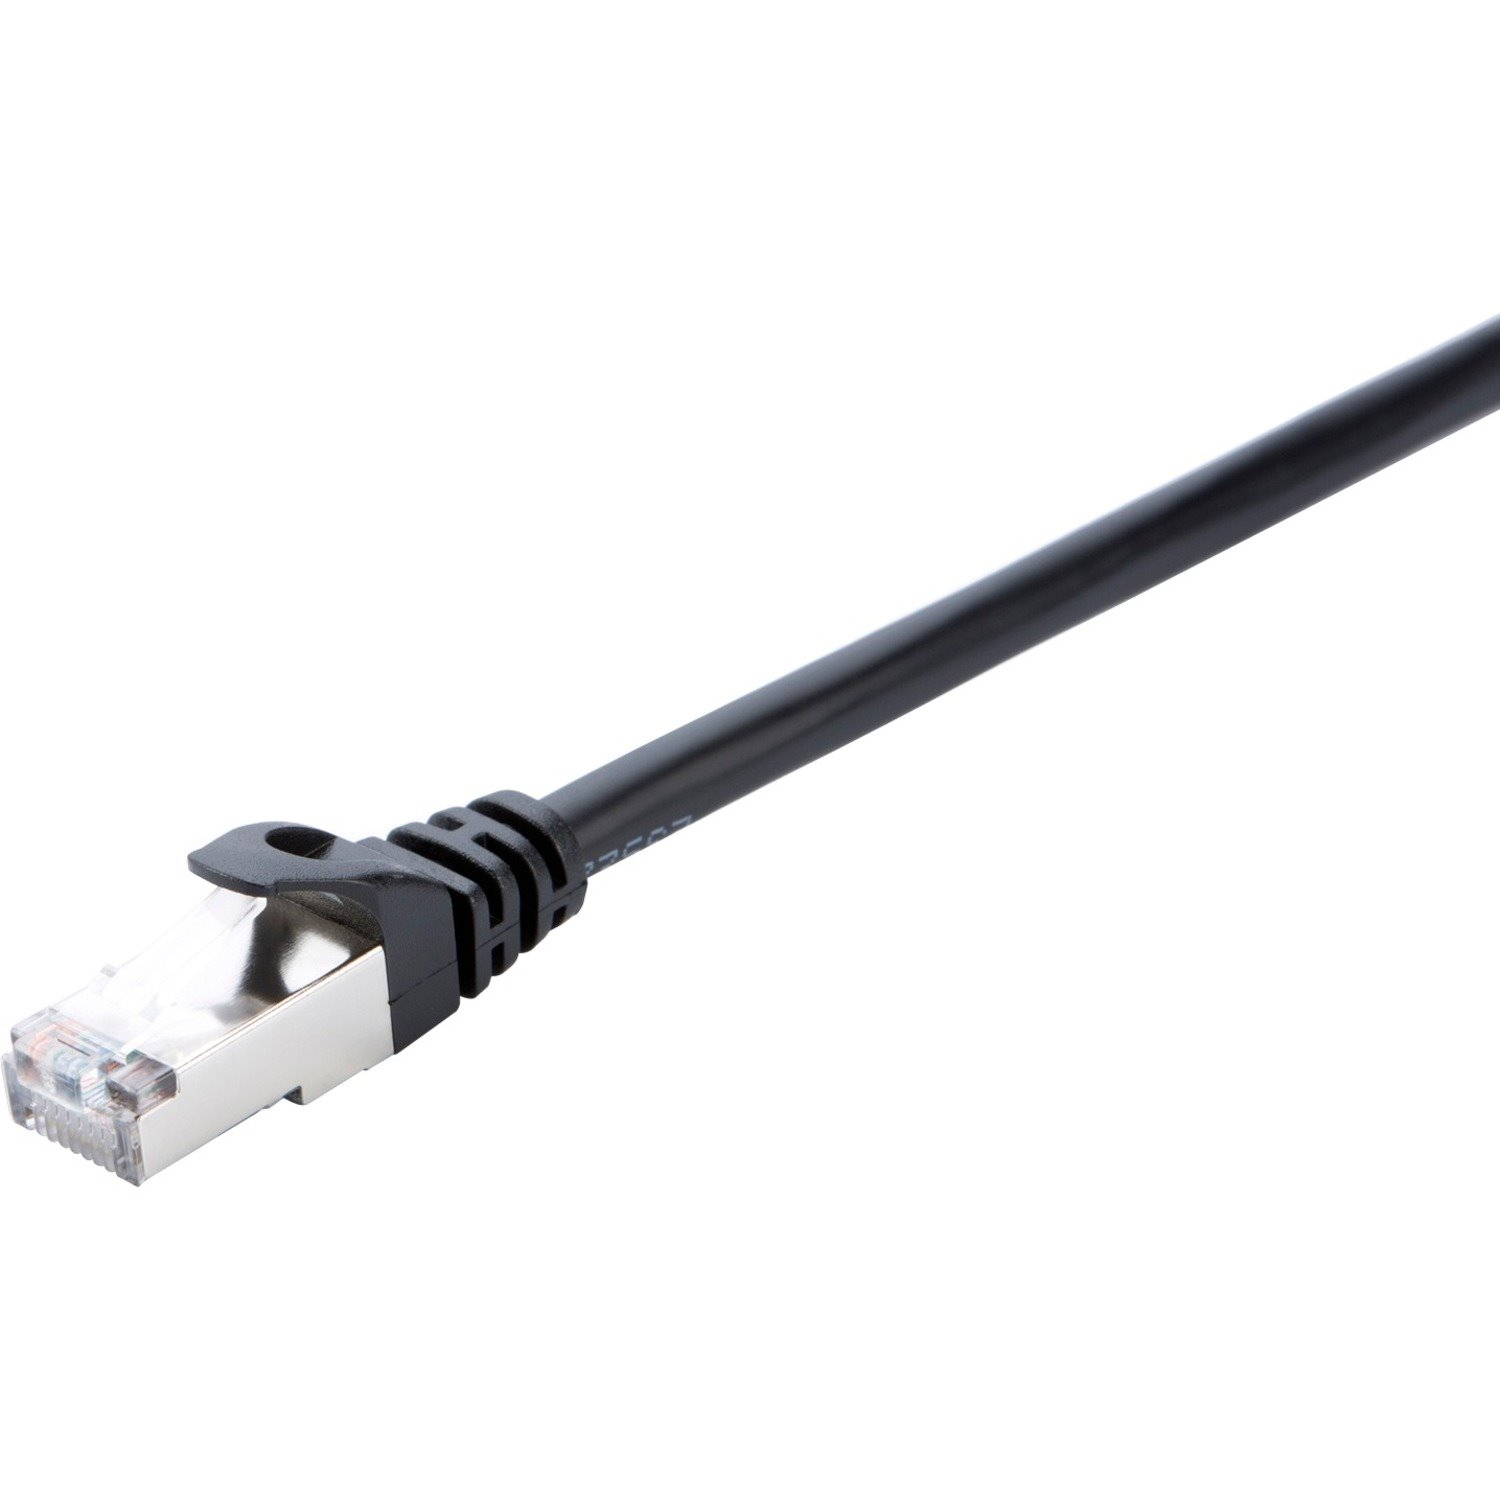 V7 Black Cat6 Shielded (STP) Cable RJ45 Male to RJ45 Male 1m 3.3ft